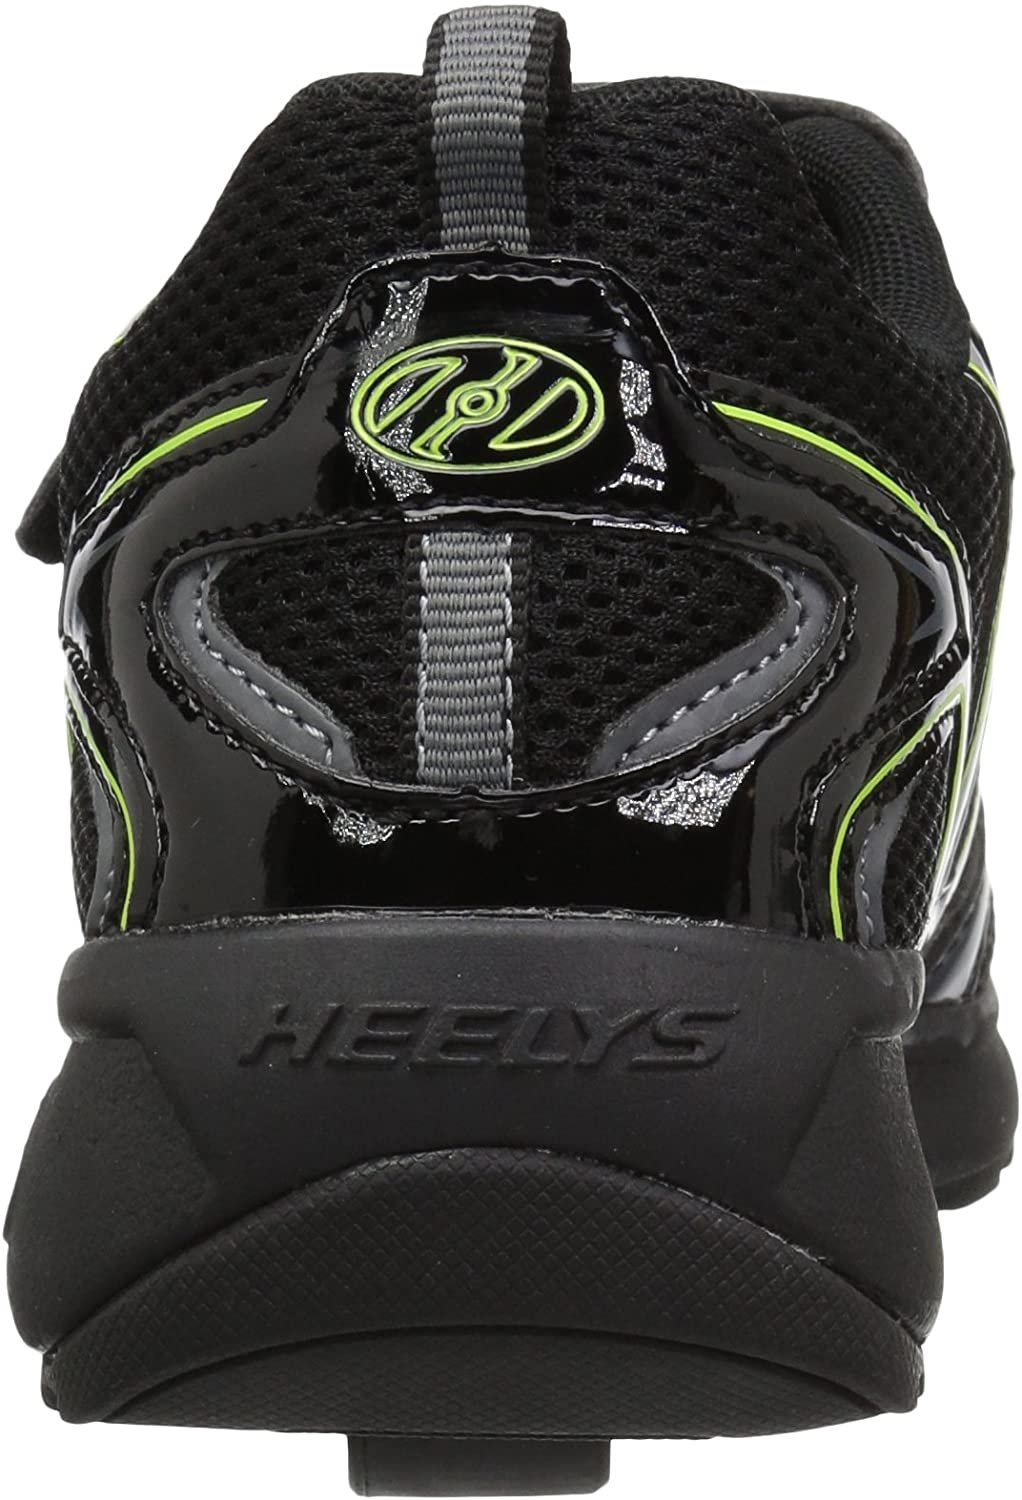 Heelys Girls Rise X2 Tennis Shoe, Black/Charcoal/Bright Yellow, 2 Little Kid - image 3 of 7